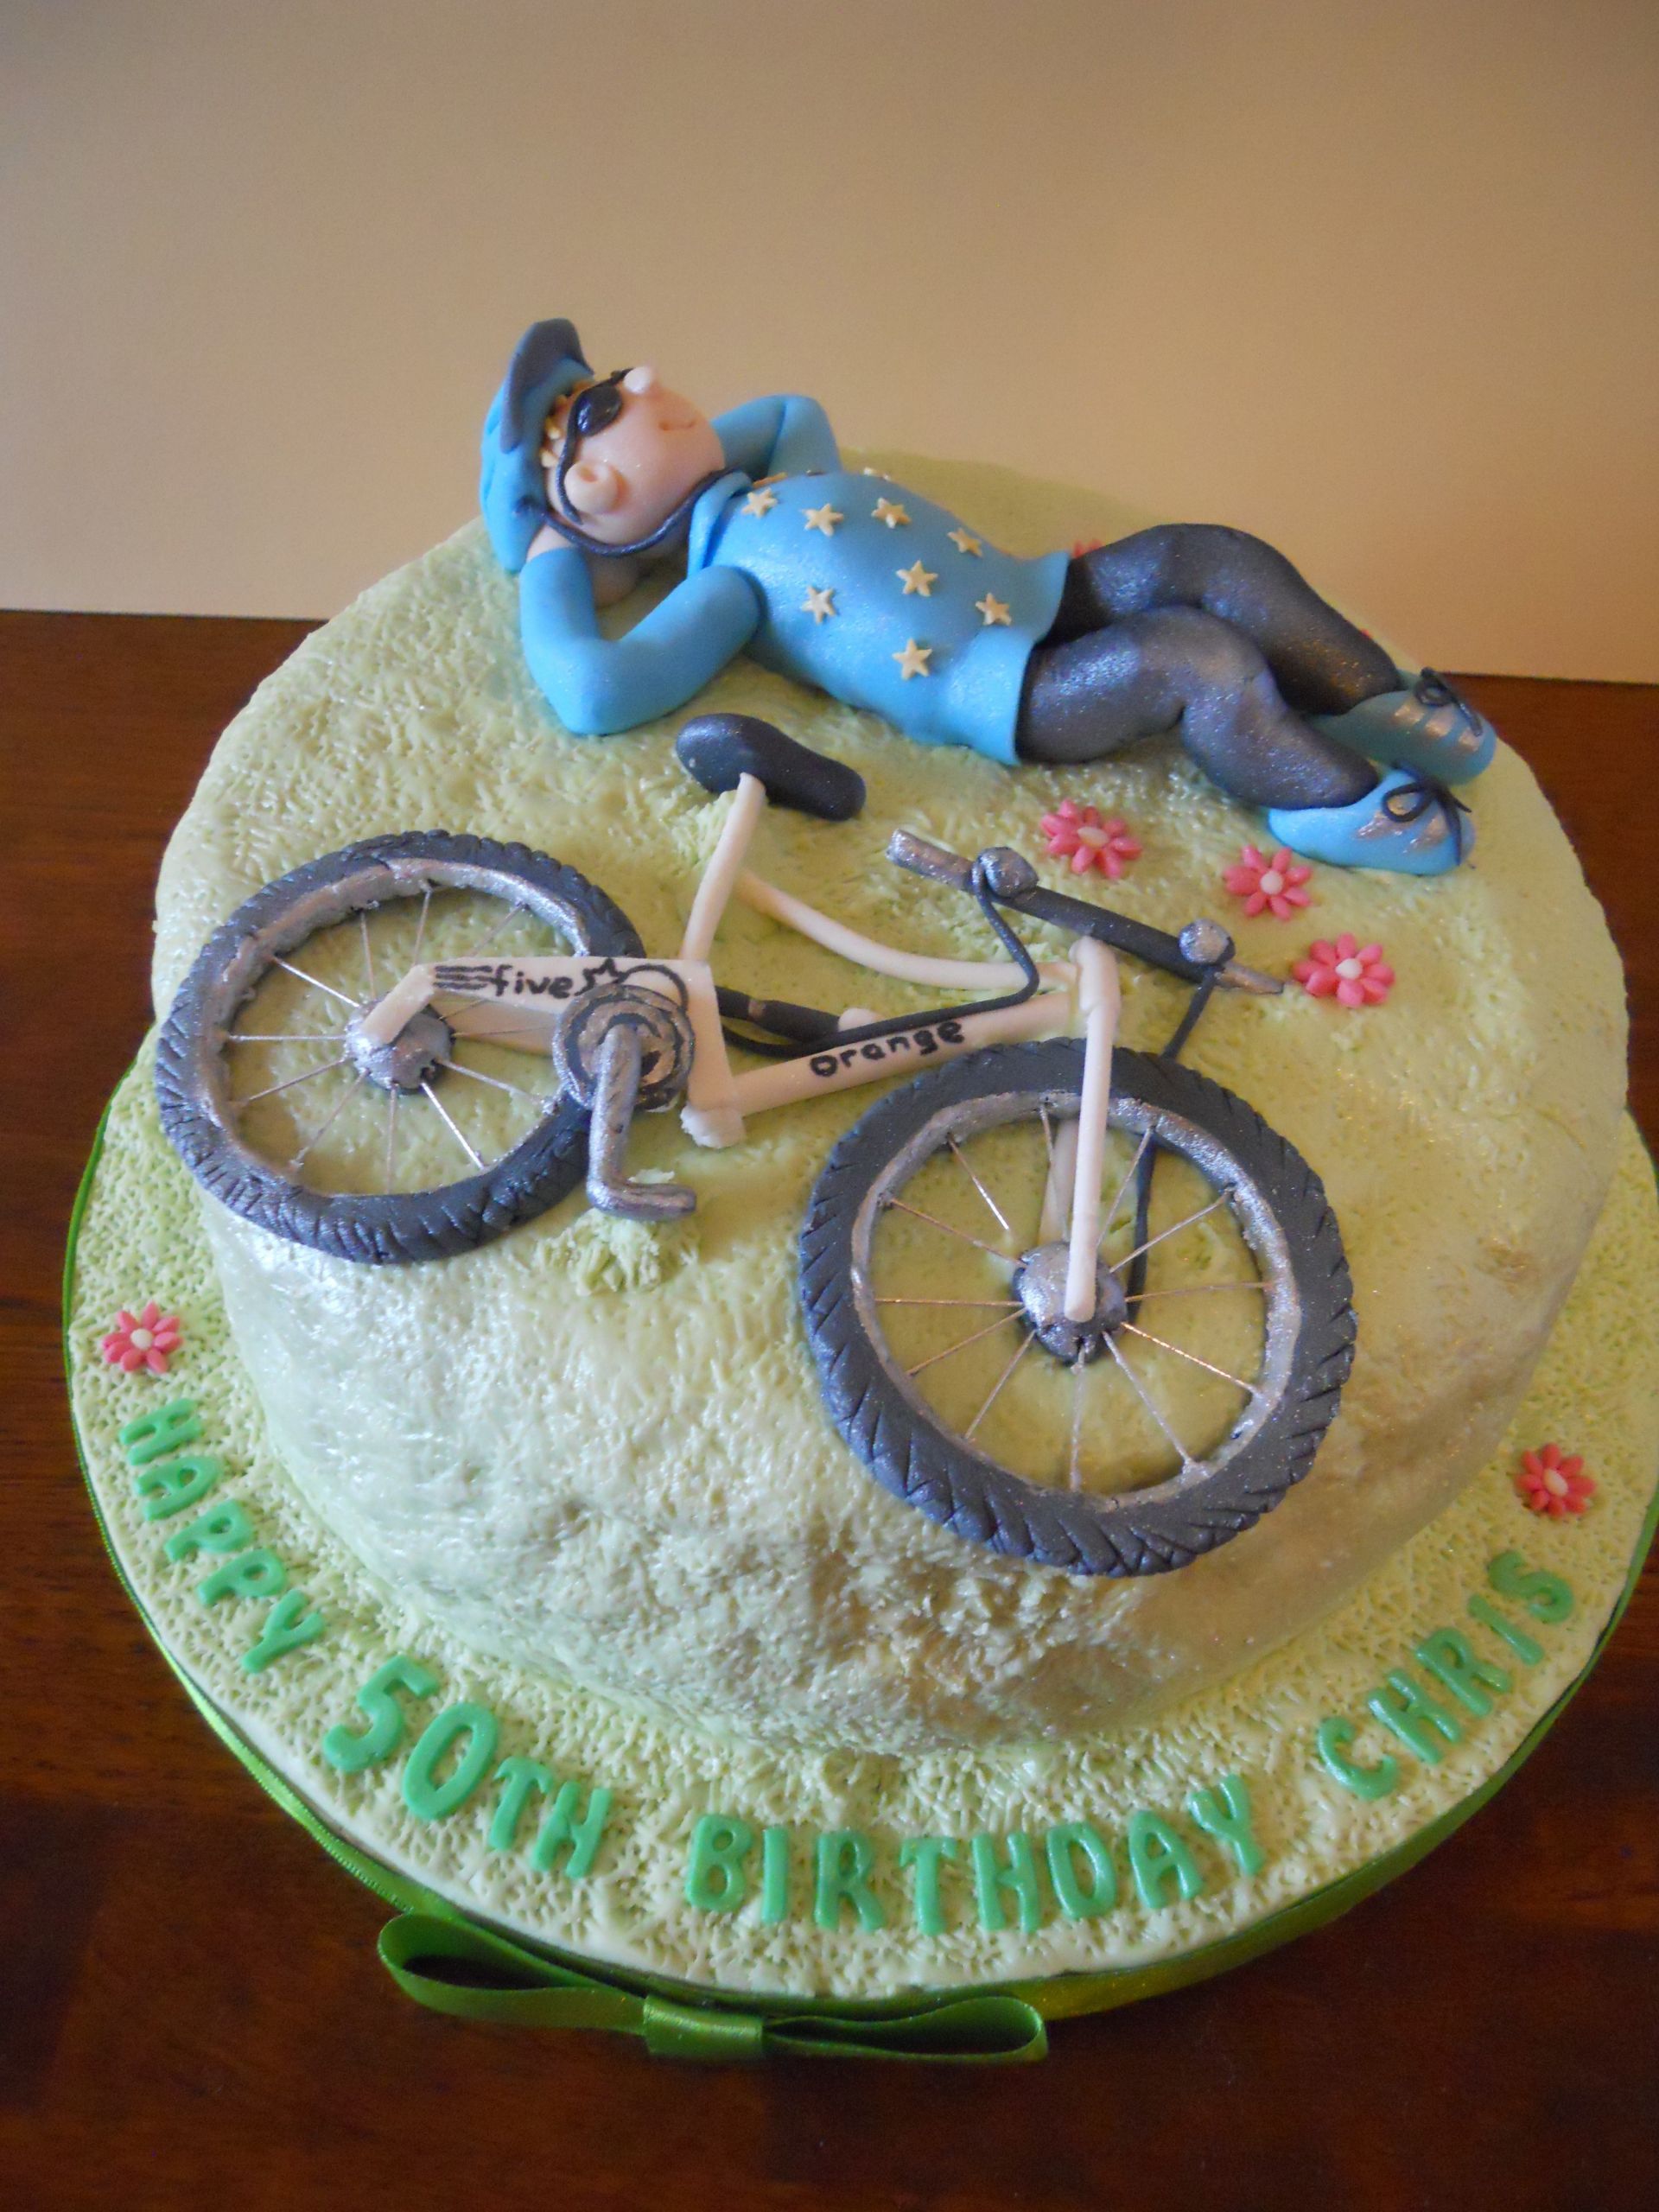 Bicycle Birthday Cake
 An Intricate Mountain Bike Cake